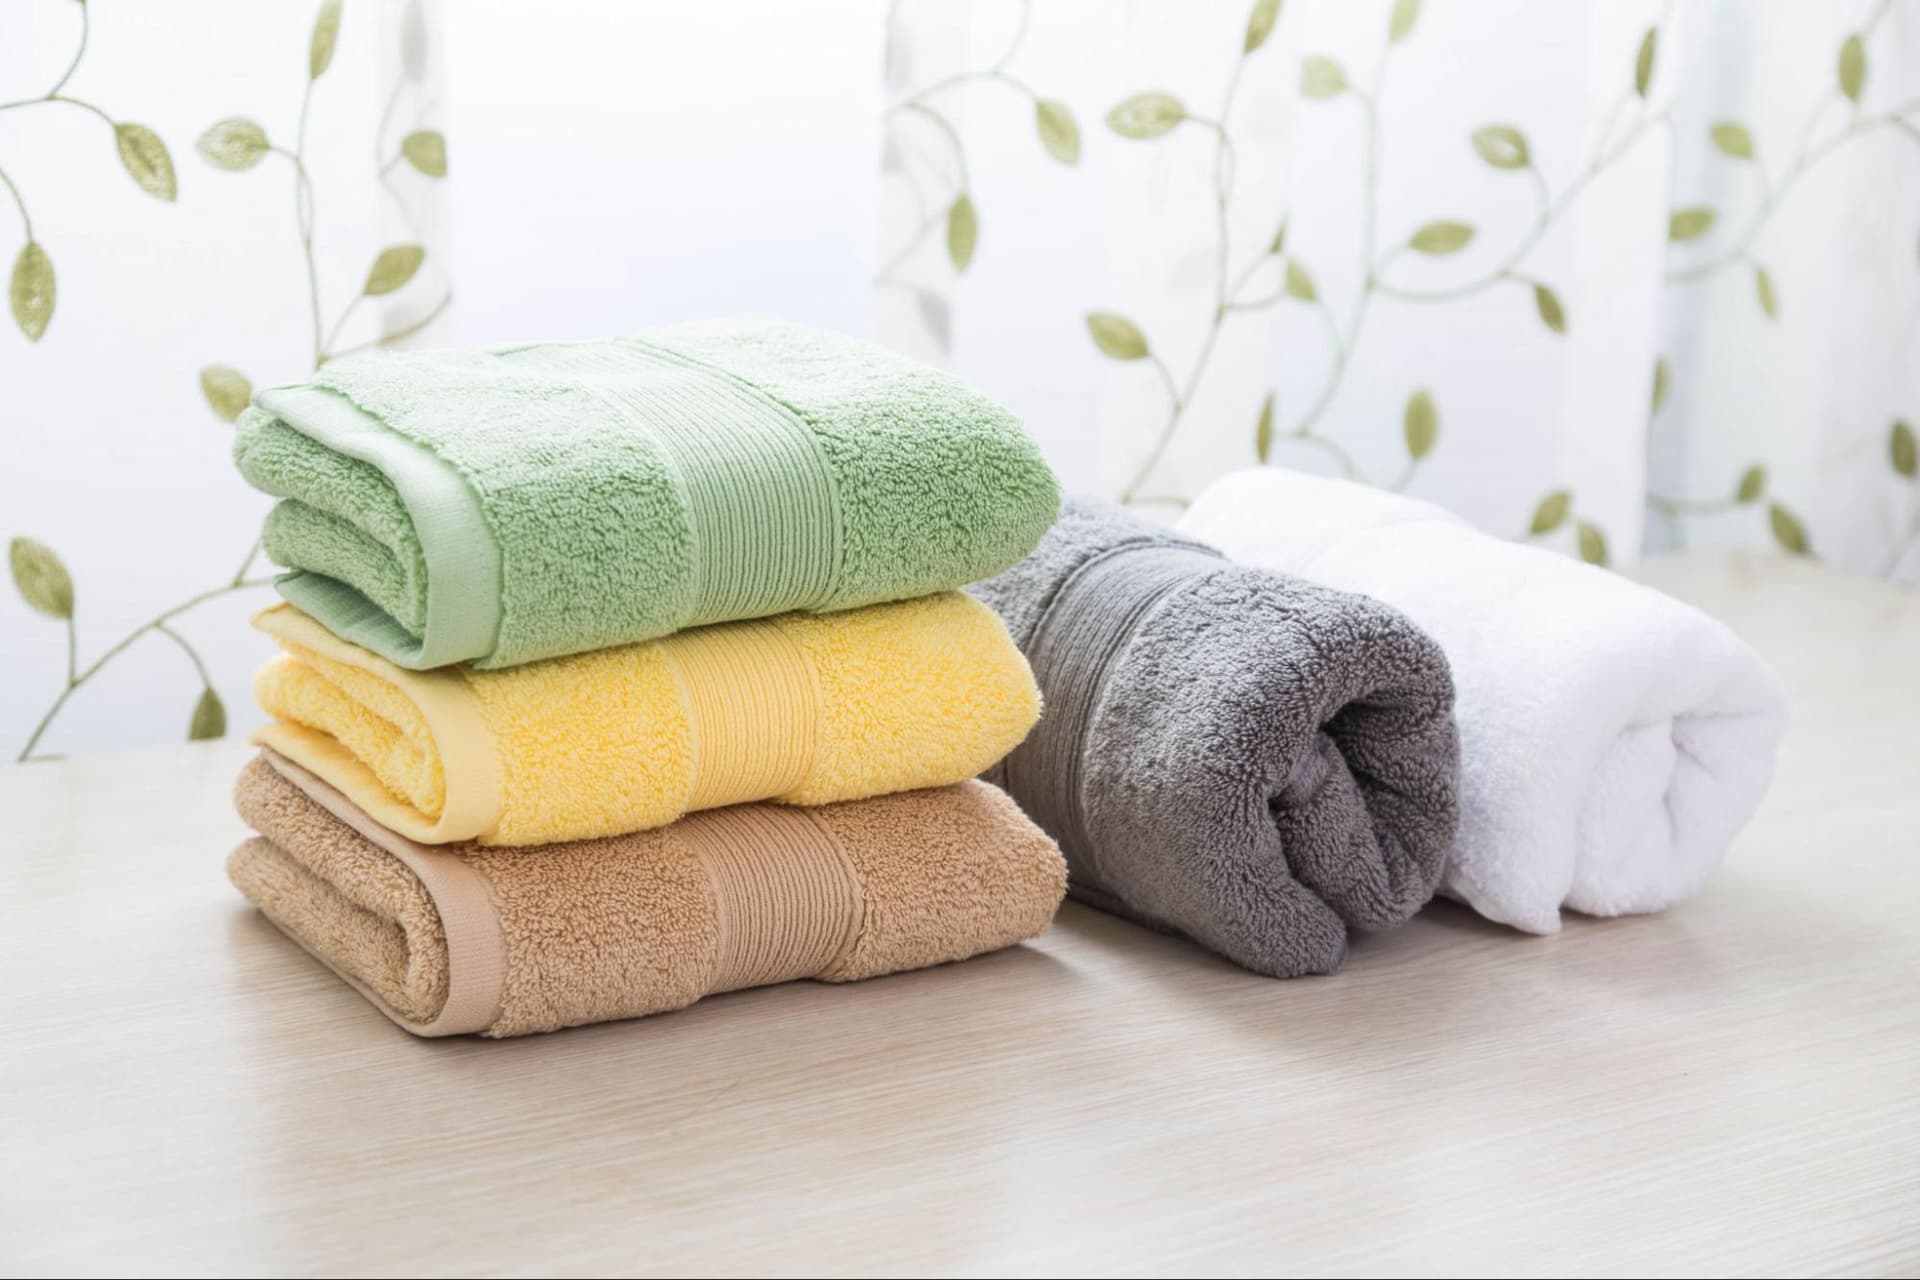 https://heatedtowelracks.com/wp-content/uploads/2023/02/how-to-choose-bathroom-towel-color-combinations-heated-towel-racks.jpg